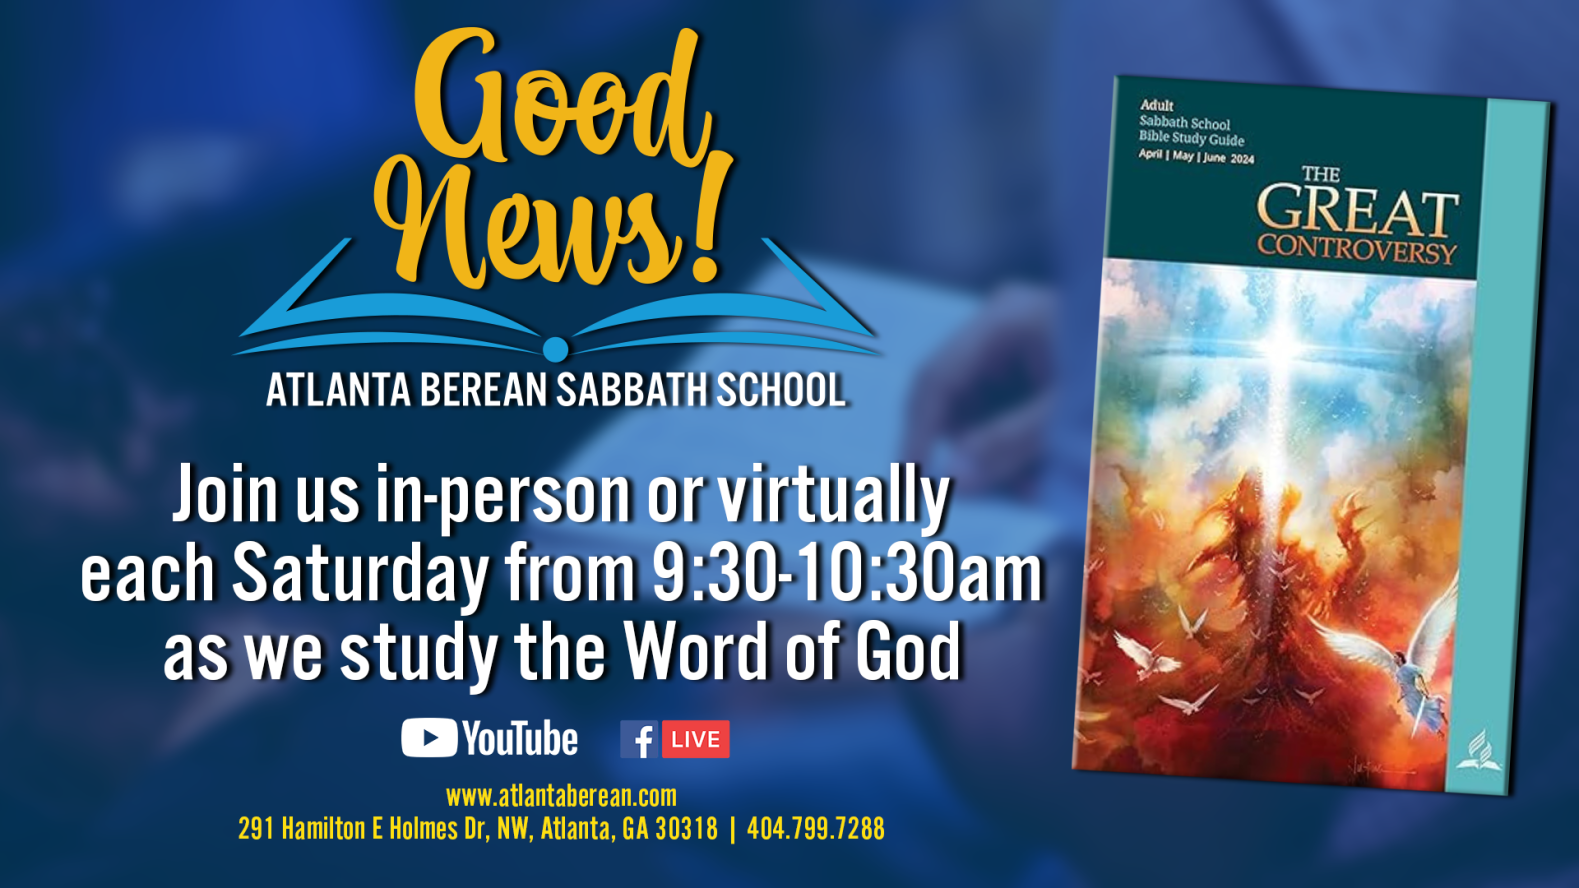 Sabbath School Good News!